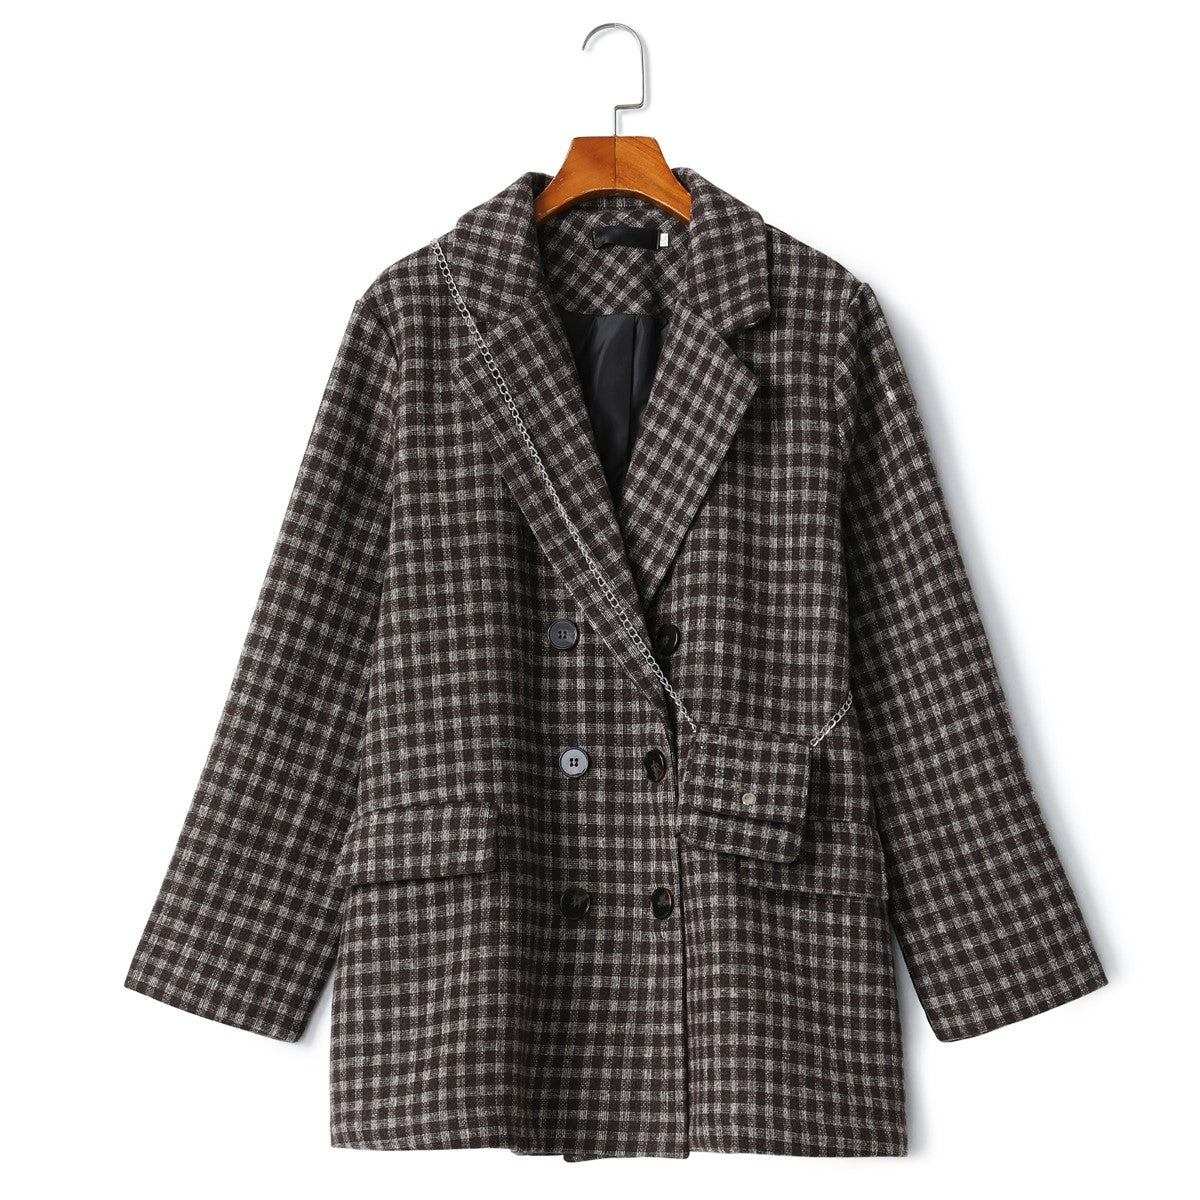 Plus Size Tweed Blazer with Mini Bag– Hello Curve